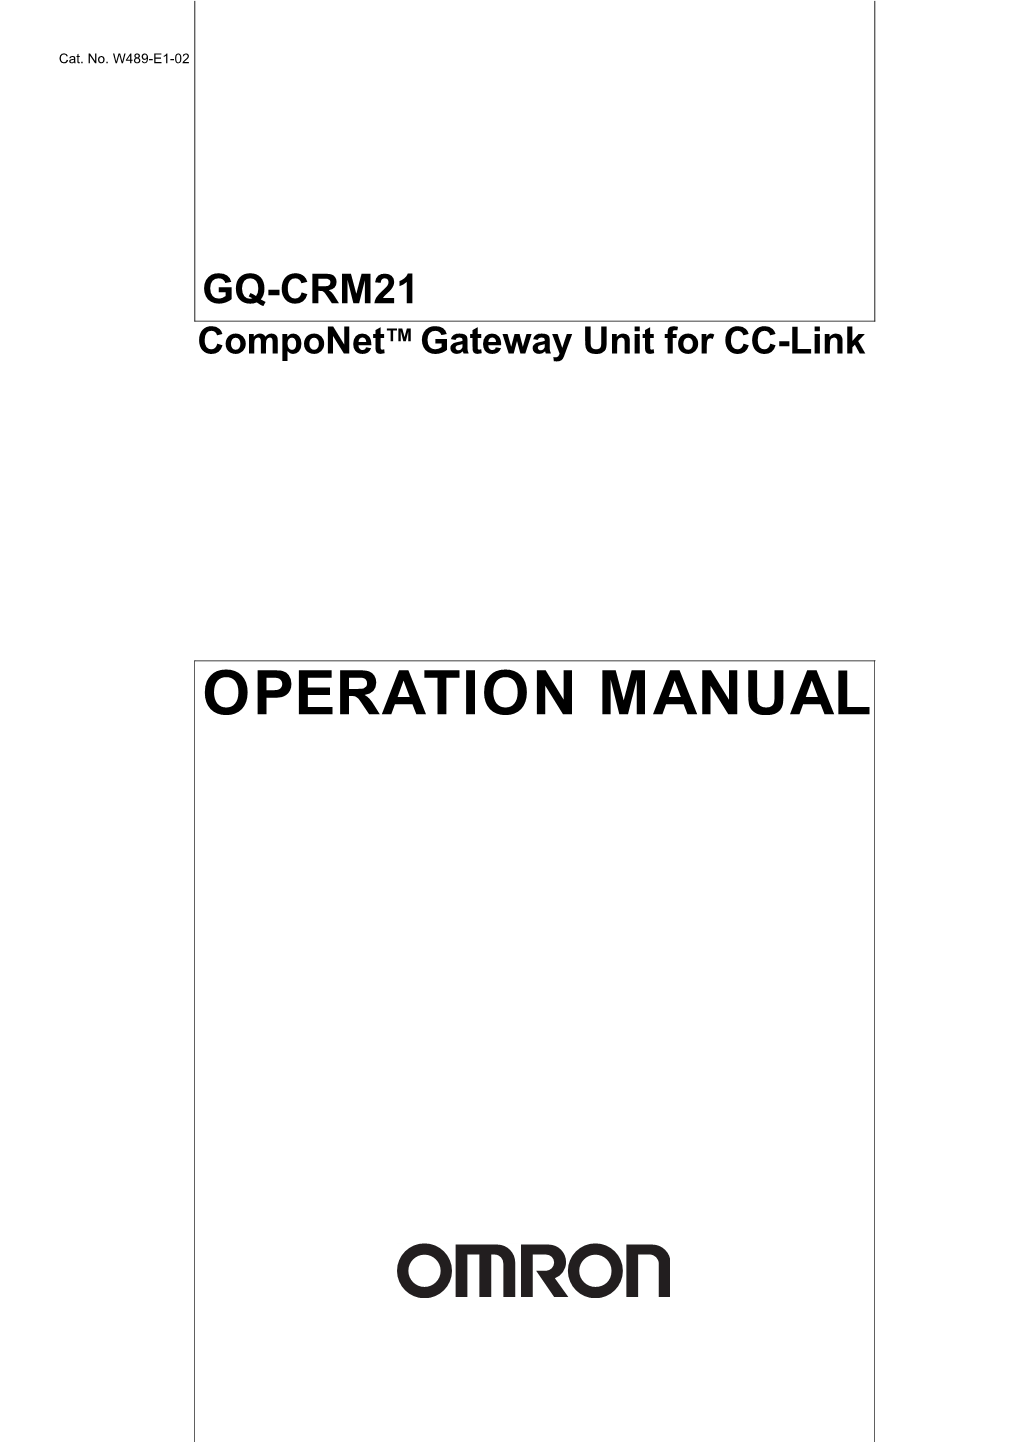 Componet Gateway Unit for CC-Link GQ-CRM21 Operation Manual